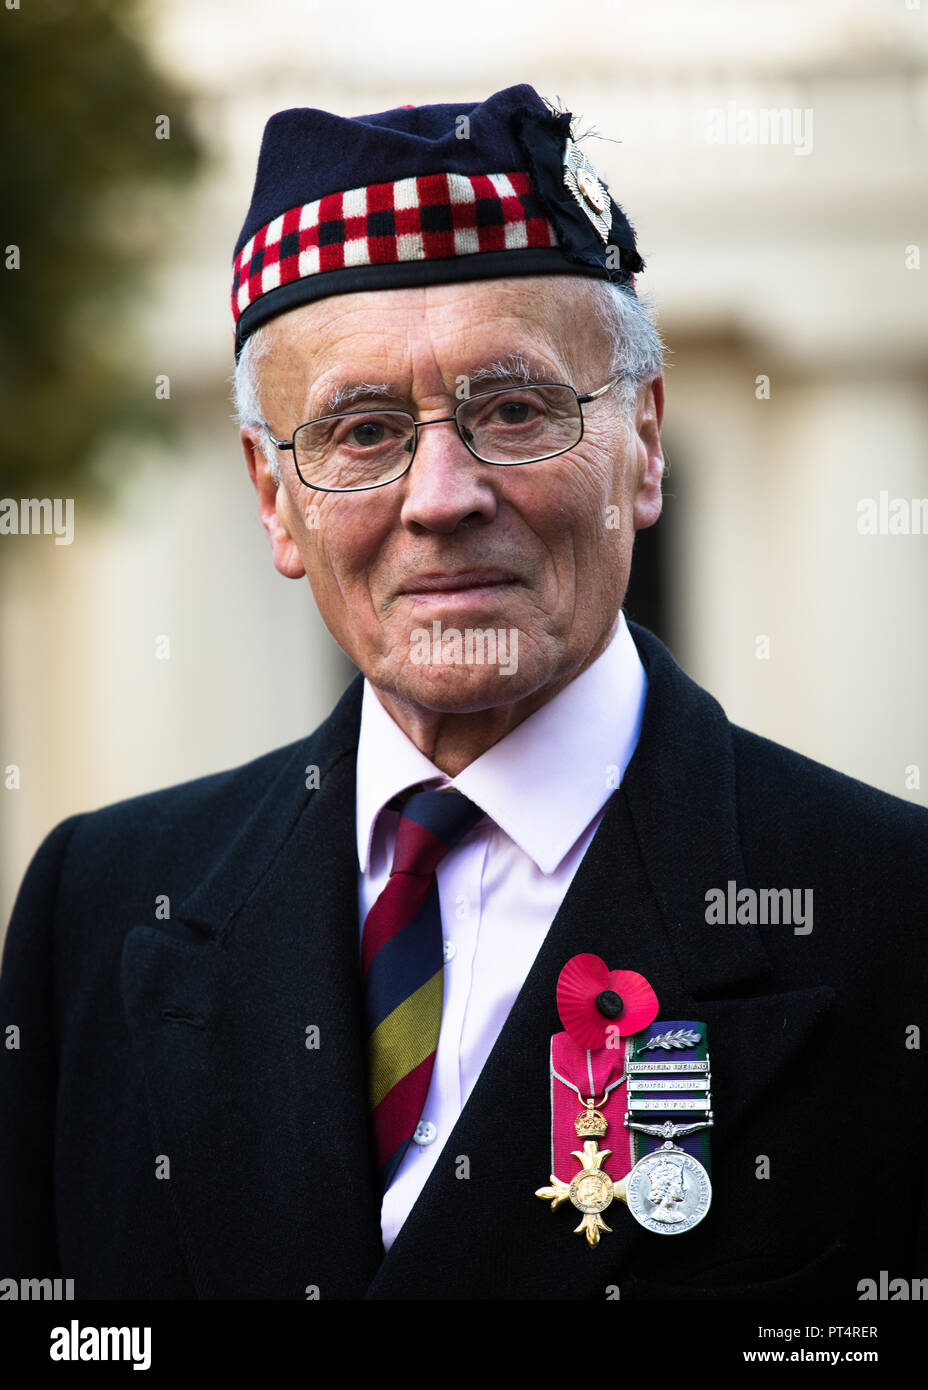 Scottish veteran wearing his regimental cap at the Remembrance Day Parade, London. Stock Photo